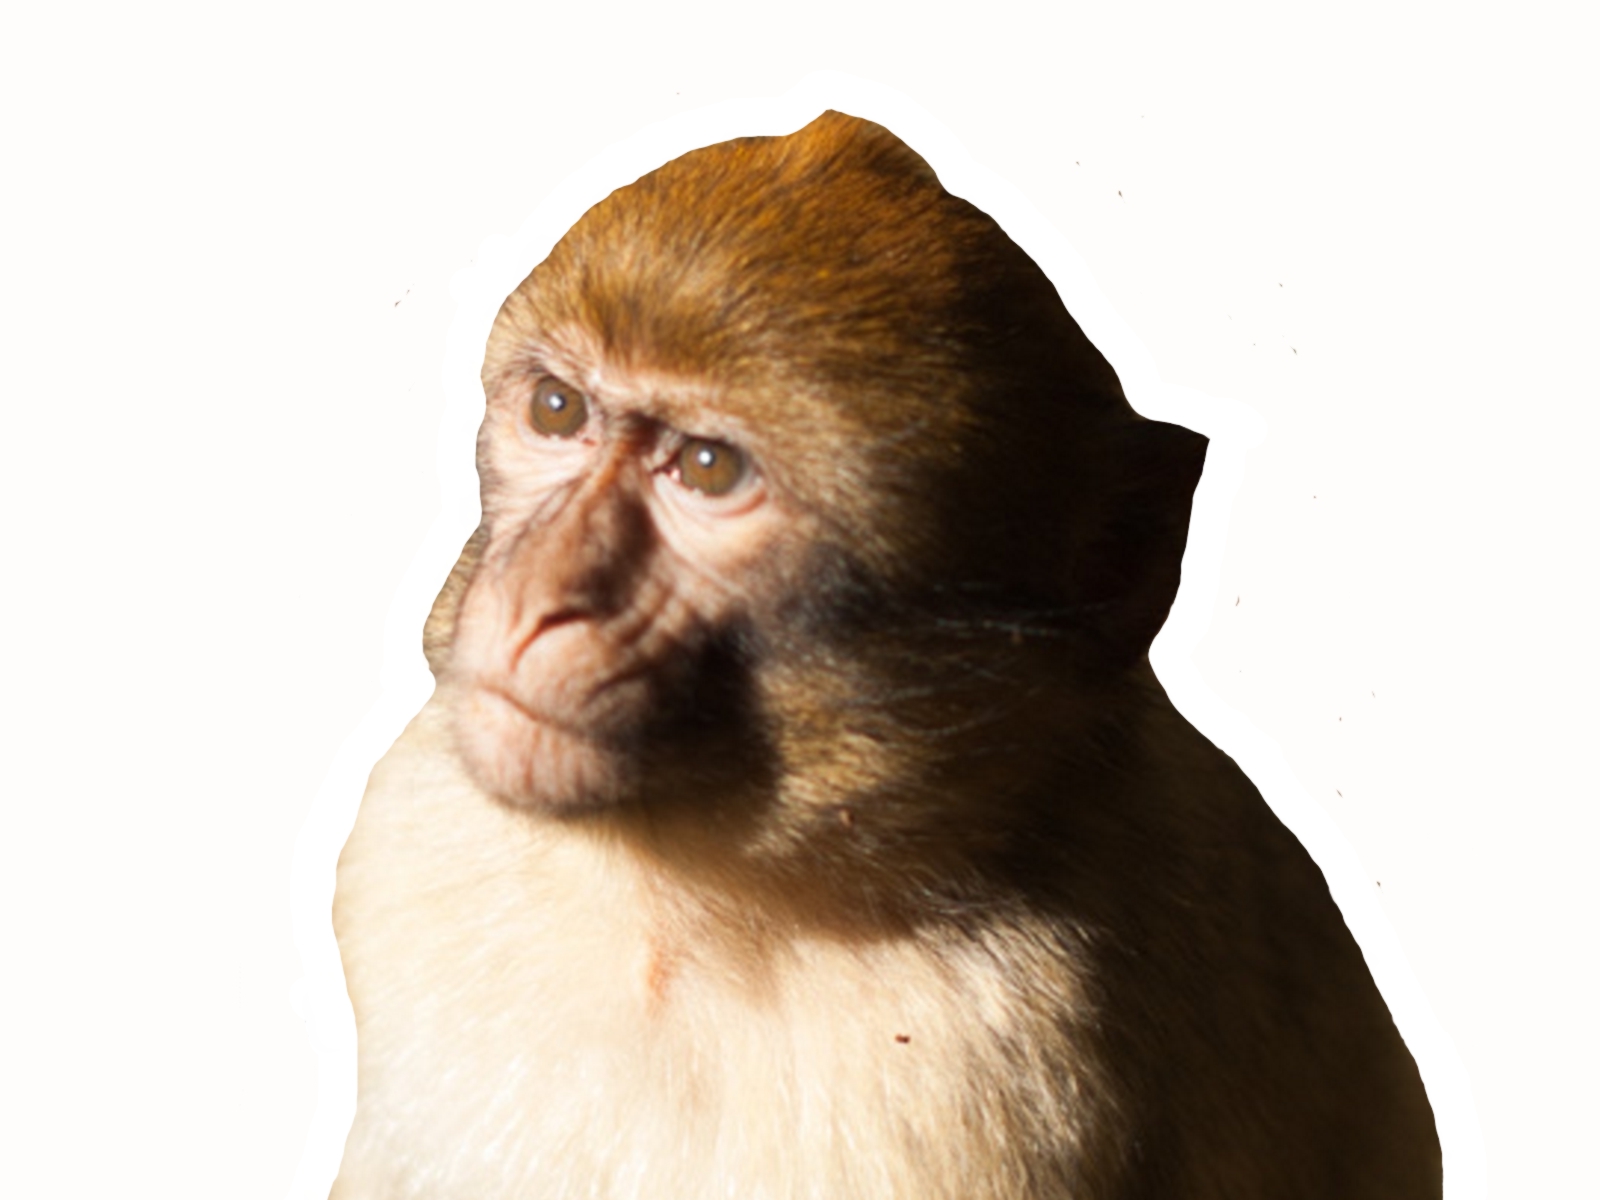 barbarie kawaii quoi serieux montagne other dubitatif mignon singe brun bruns perplexe yeux cute de kawai regard intelligent macaque surpris magot fond maroc blanc serieusement